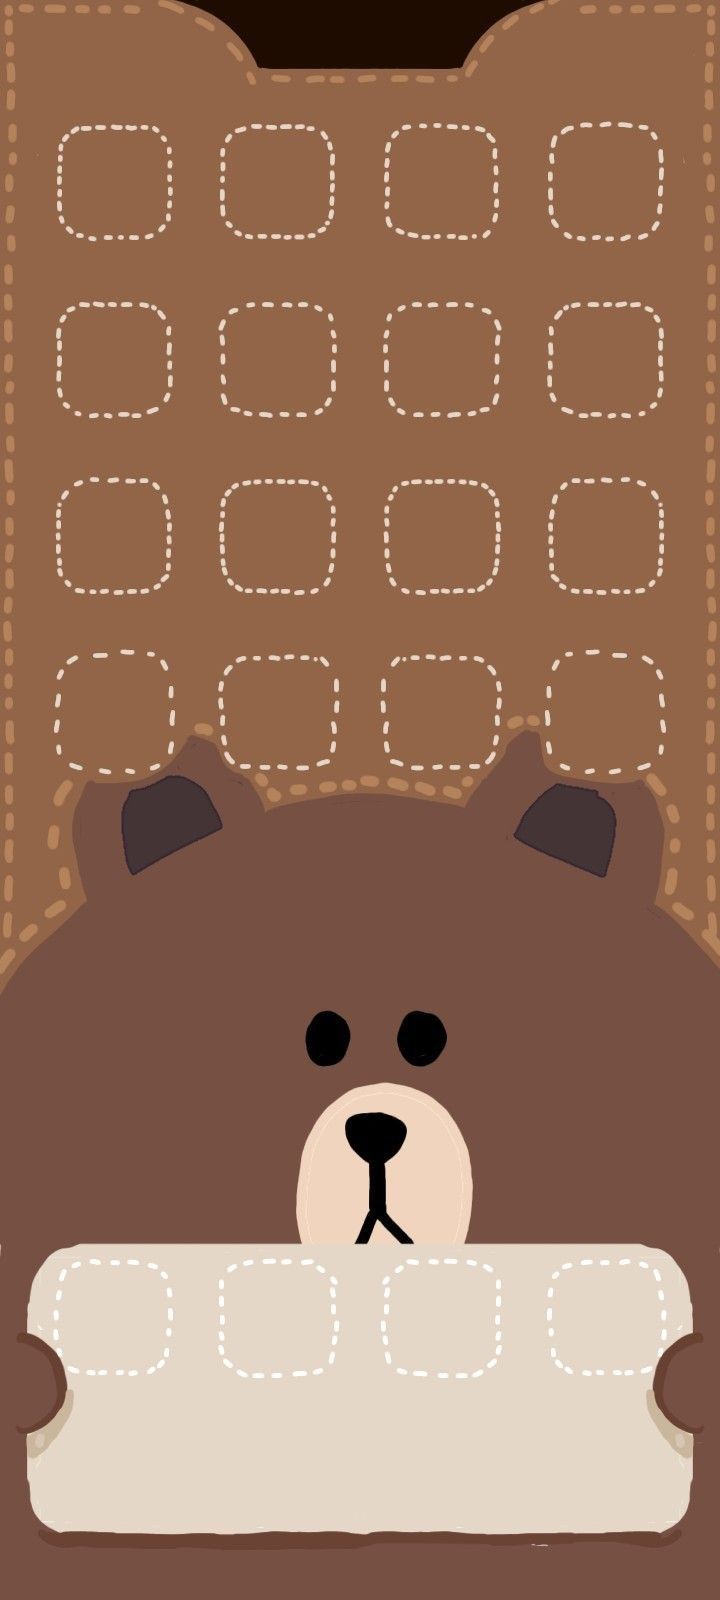 Cute Teddy Bears  Snuggly Kittens Live Wallpaper  free download